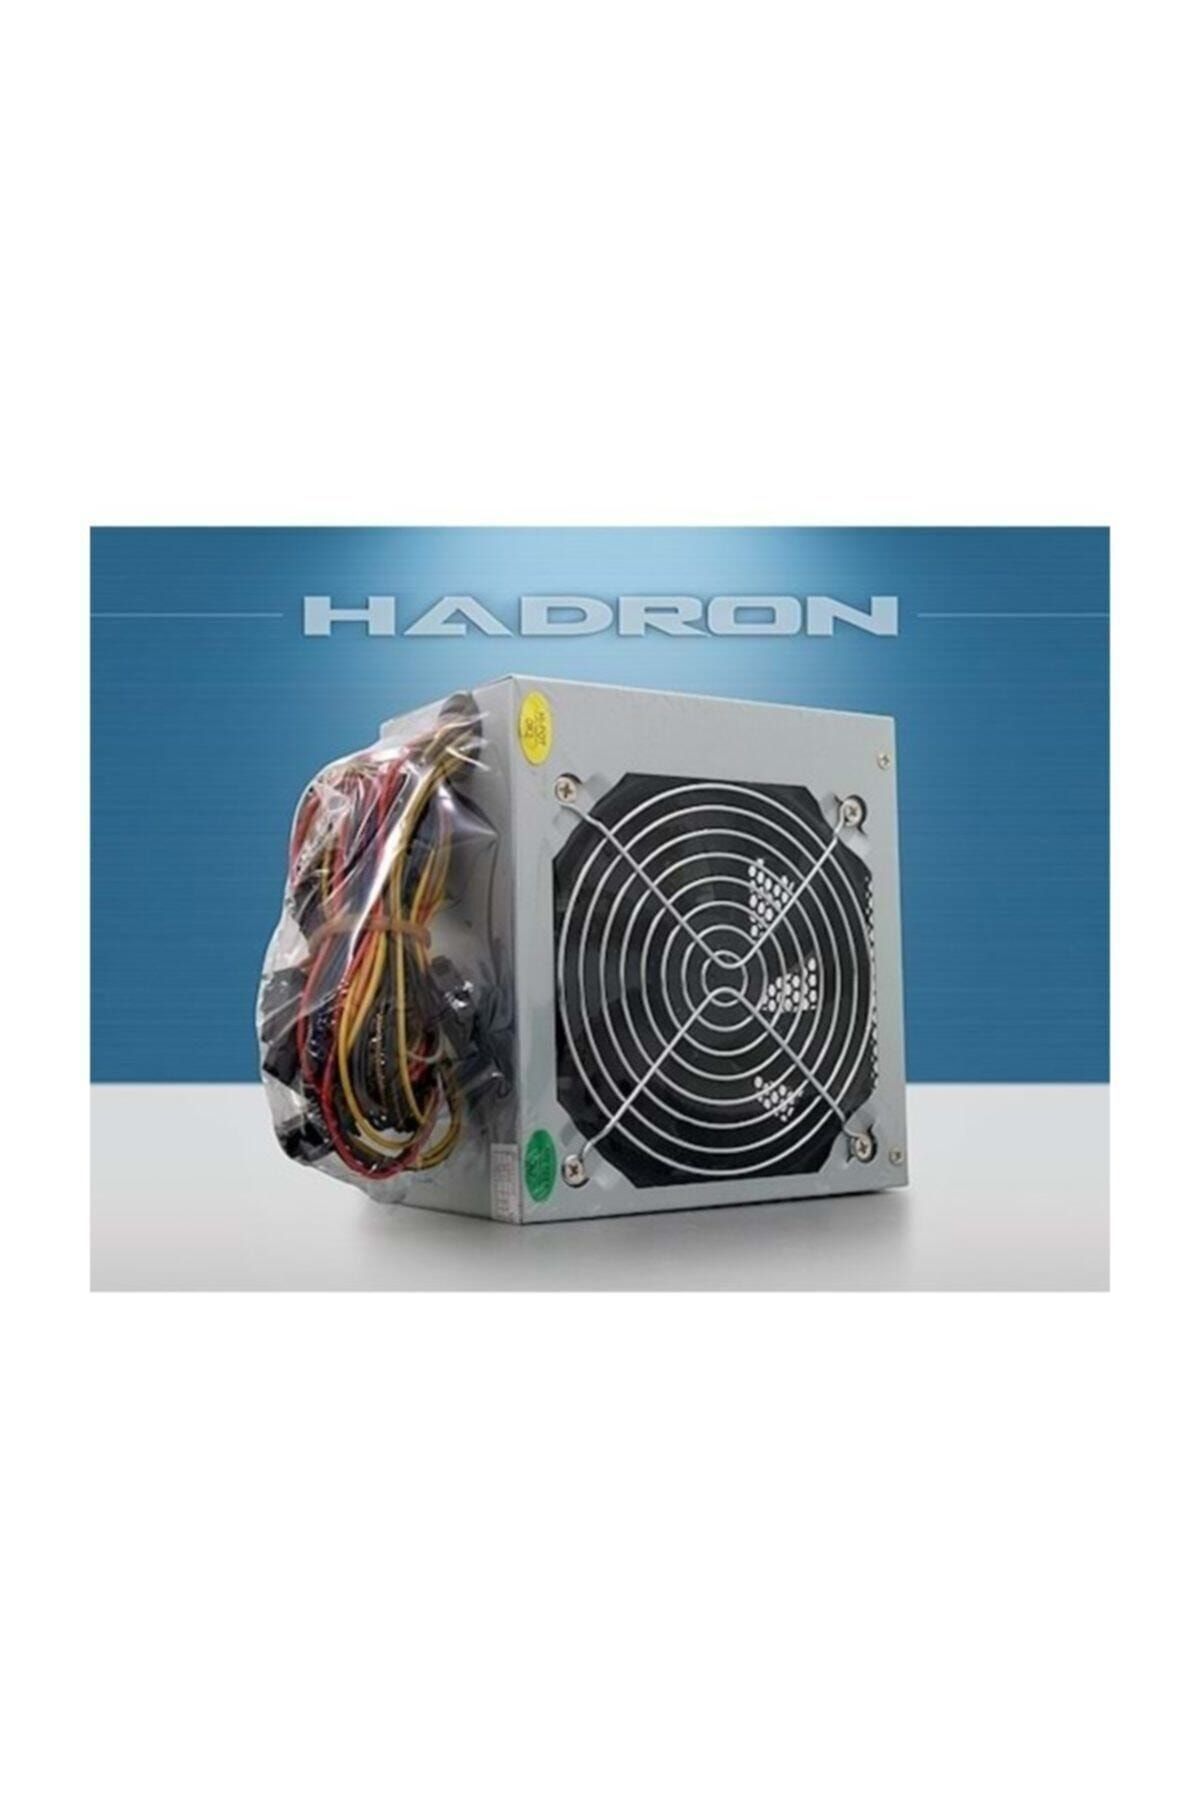 OEM Hadron Hd401 250 Watt 12 Cm Fanlı Power Supply